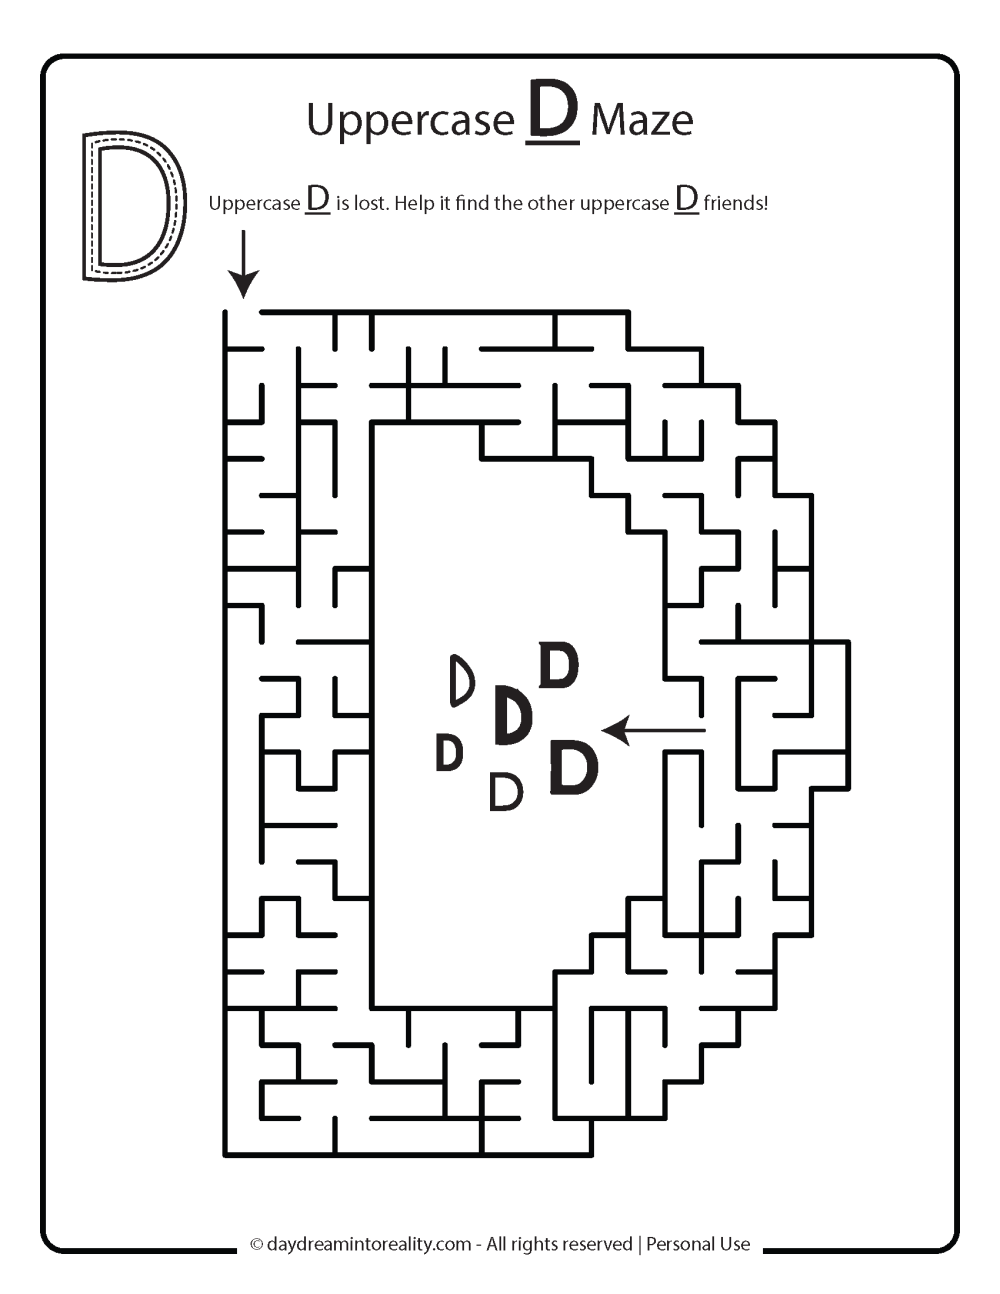 Letter D worksheet free printables. Uppercase D maze